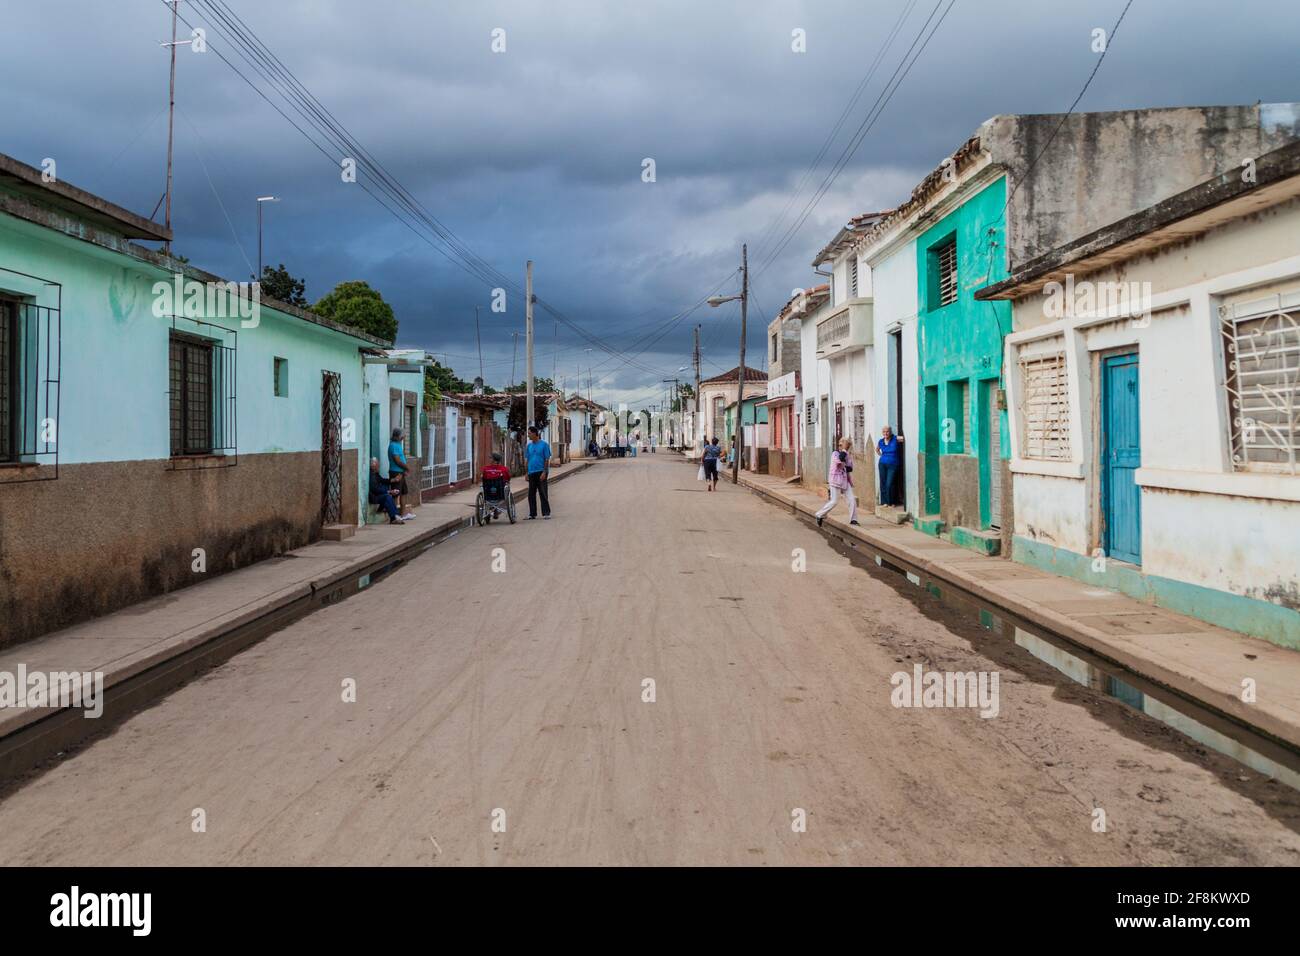 REMEDIOS, CUBA - FEB 12, 2016: View of a street in Remedios town, Cuba Stock Photo